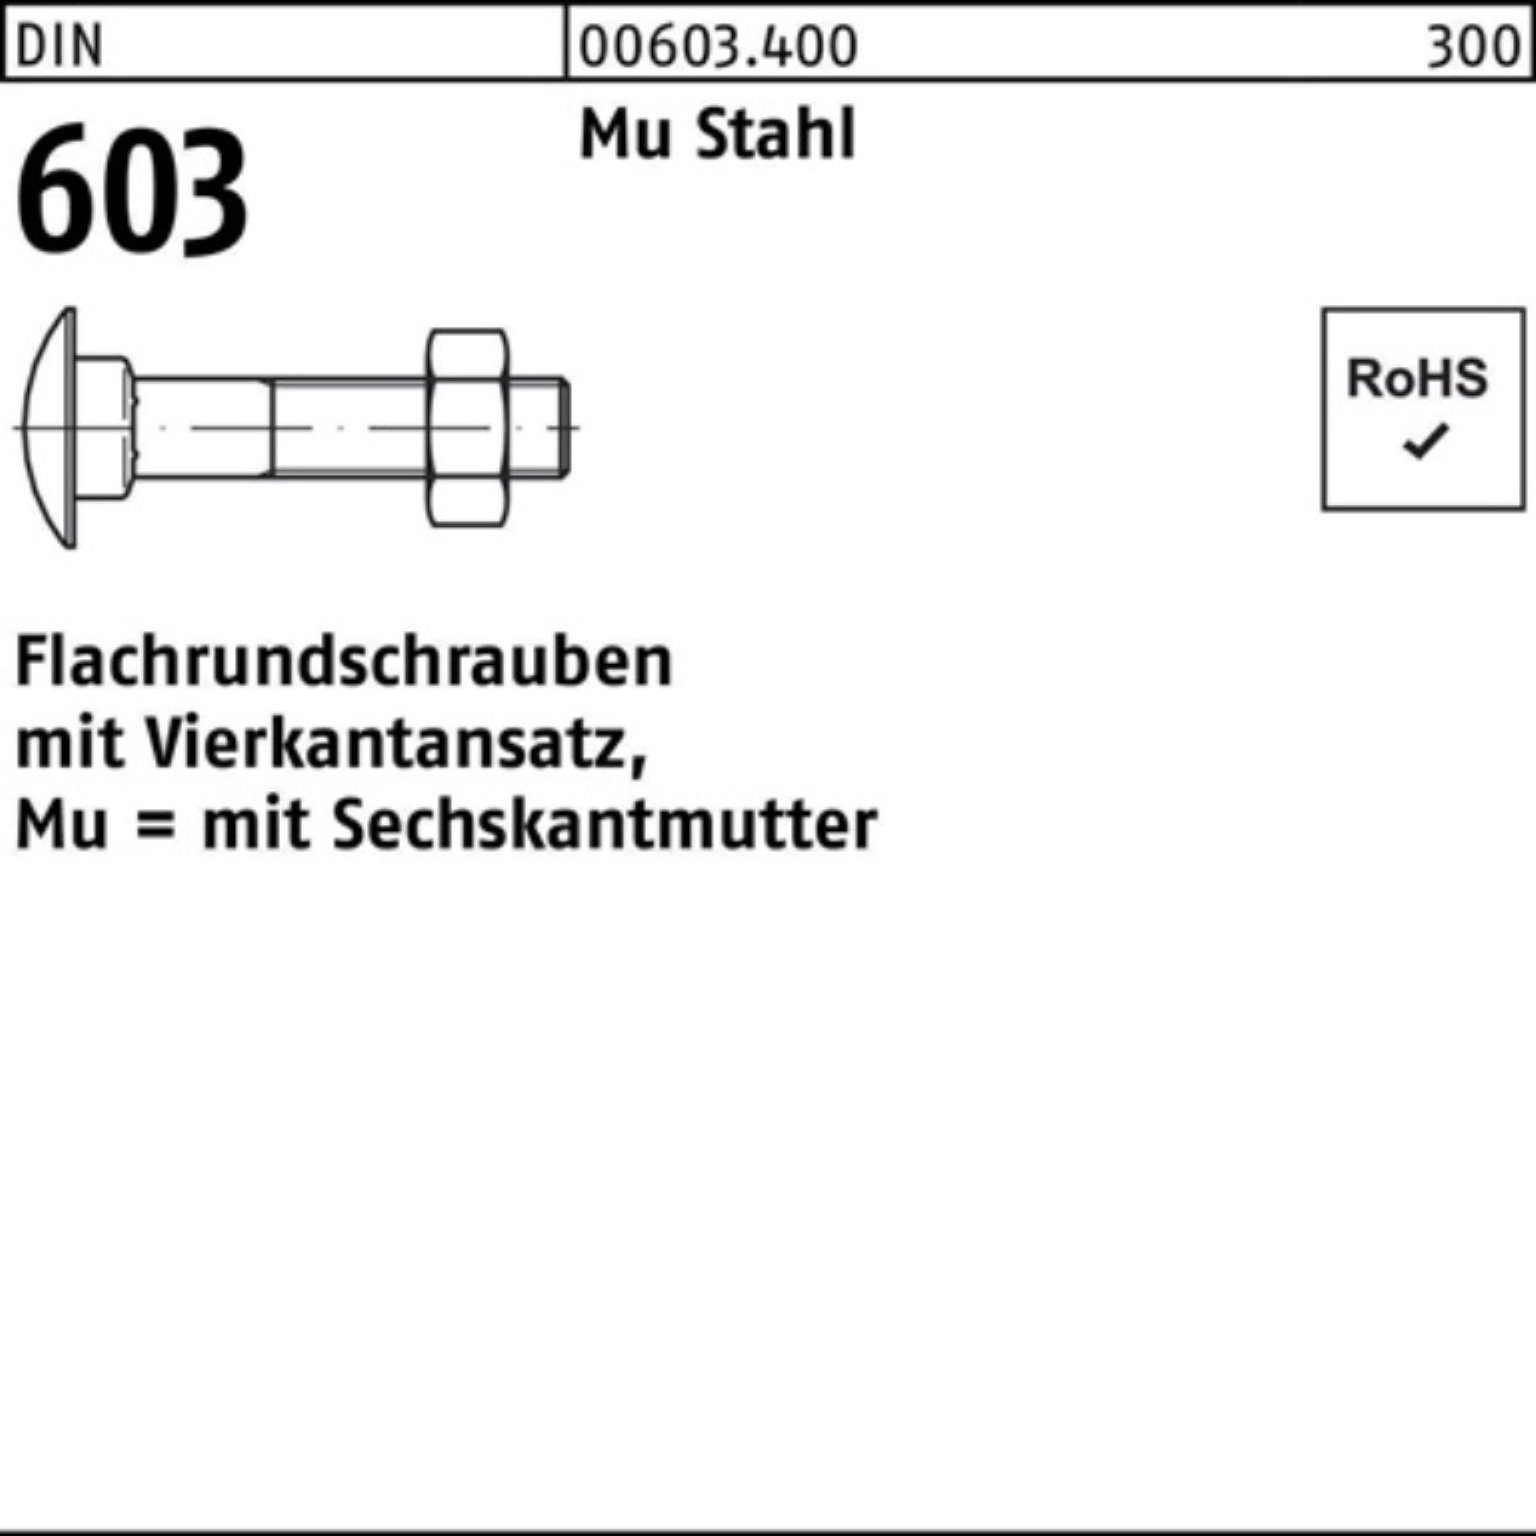 Reyher Pack 100er DIN Flachrundschraube Vierkantansatz/6-ktmutter Schraube M16x80 603